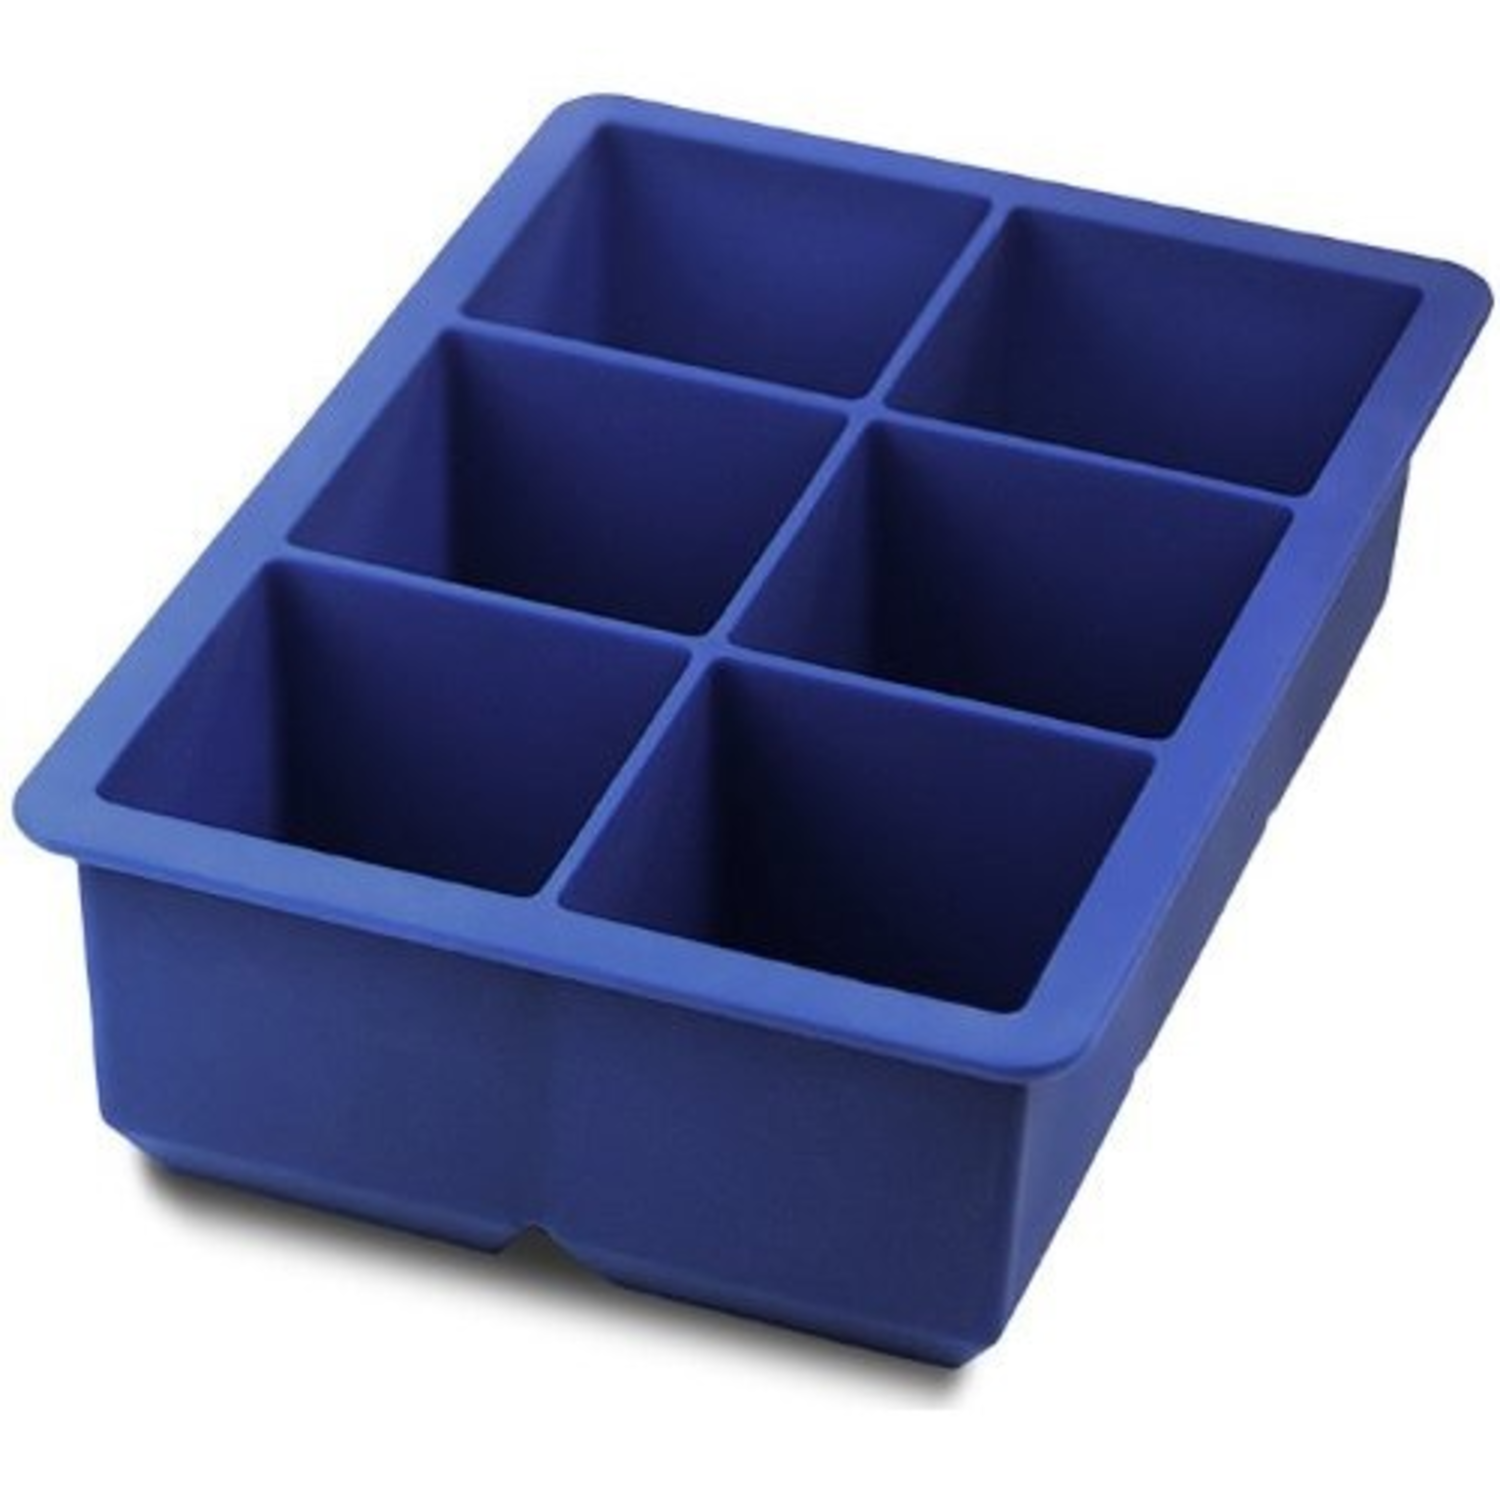 https://cdn.shoplightspeed.com/shops/633447/files/18300520/1500x4000x3/tovolo-blue-king-cube-ice-cube-tray.jpg